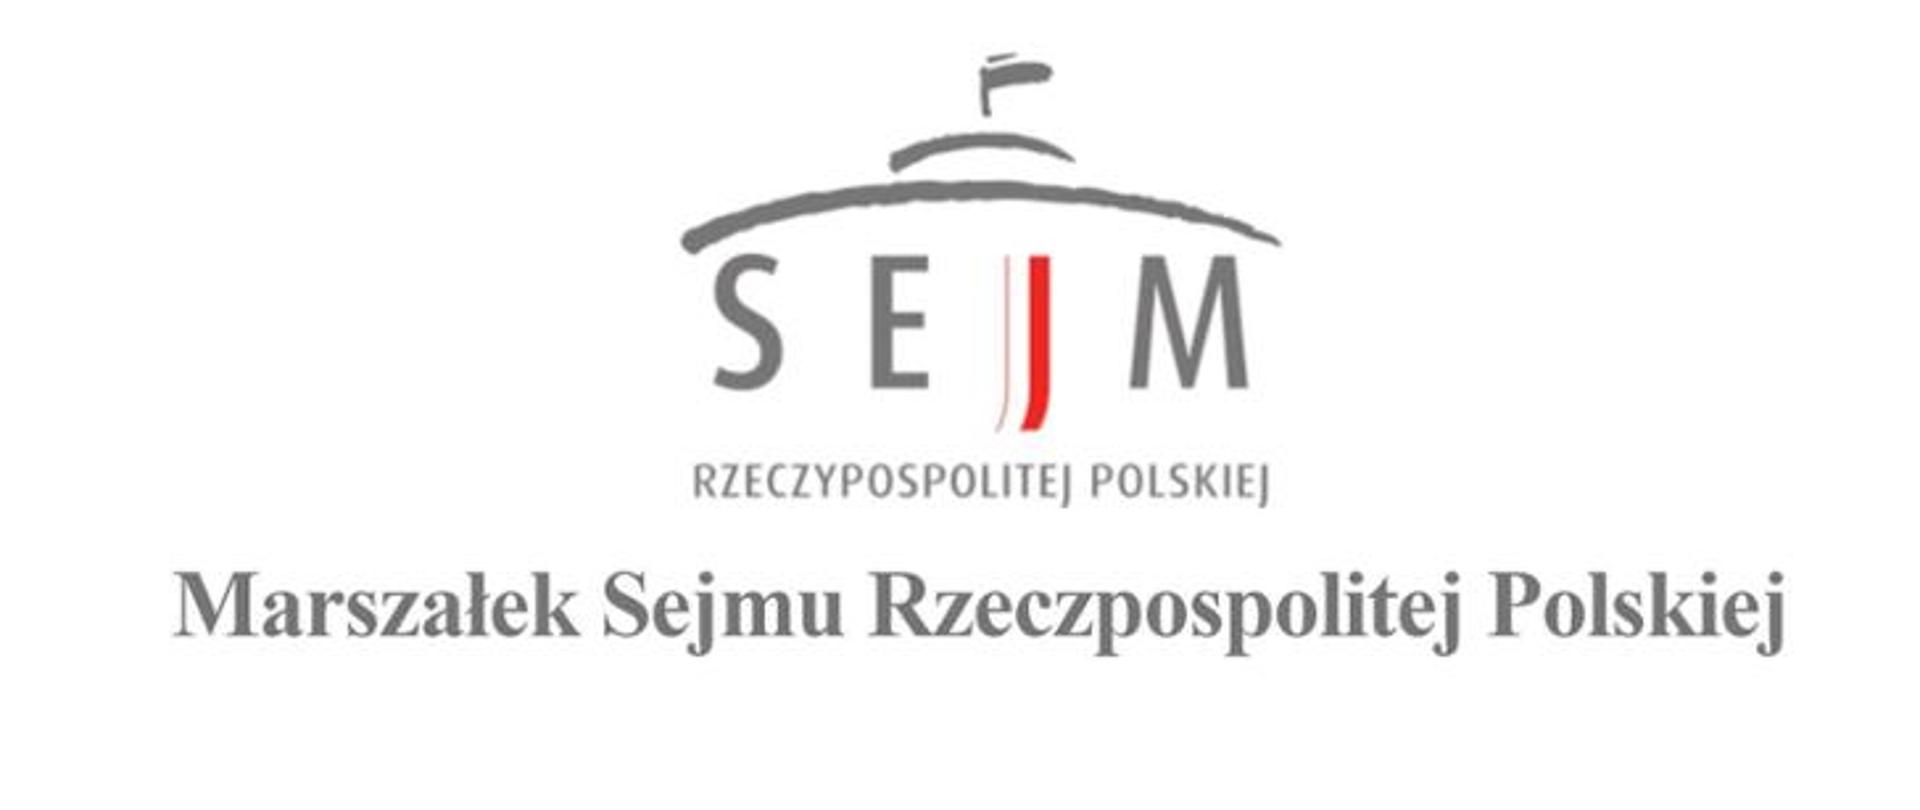 Marszałek Sejmu